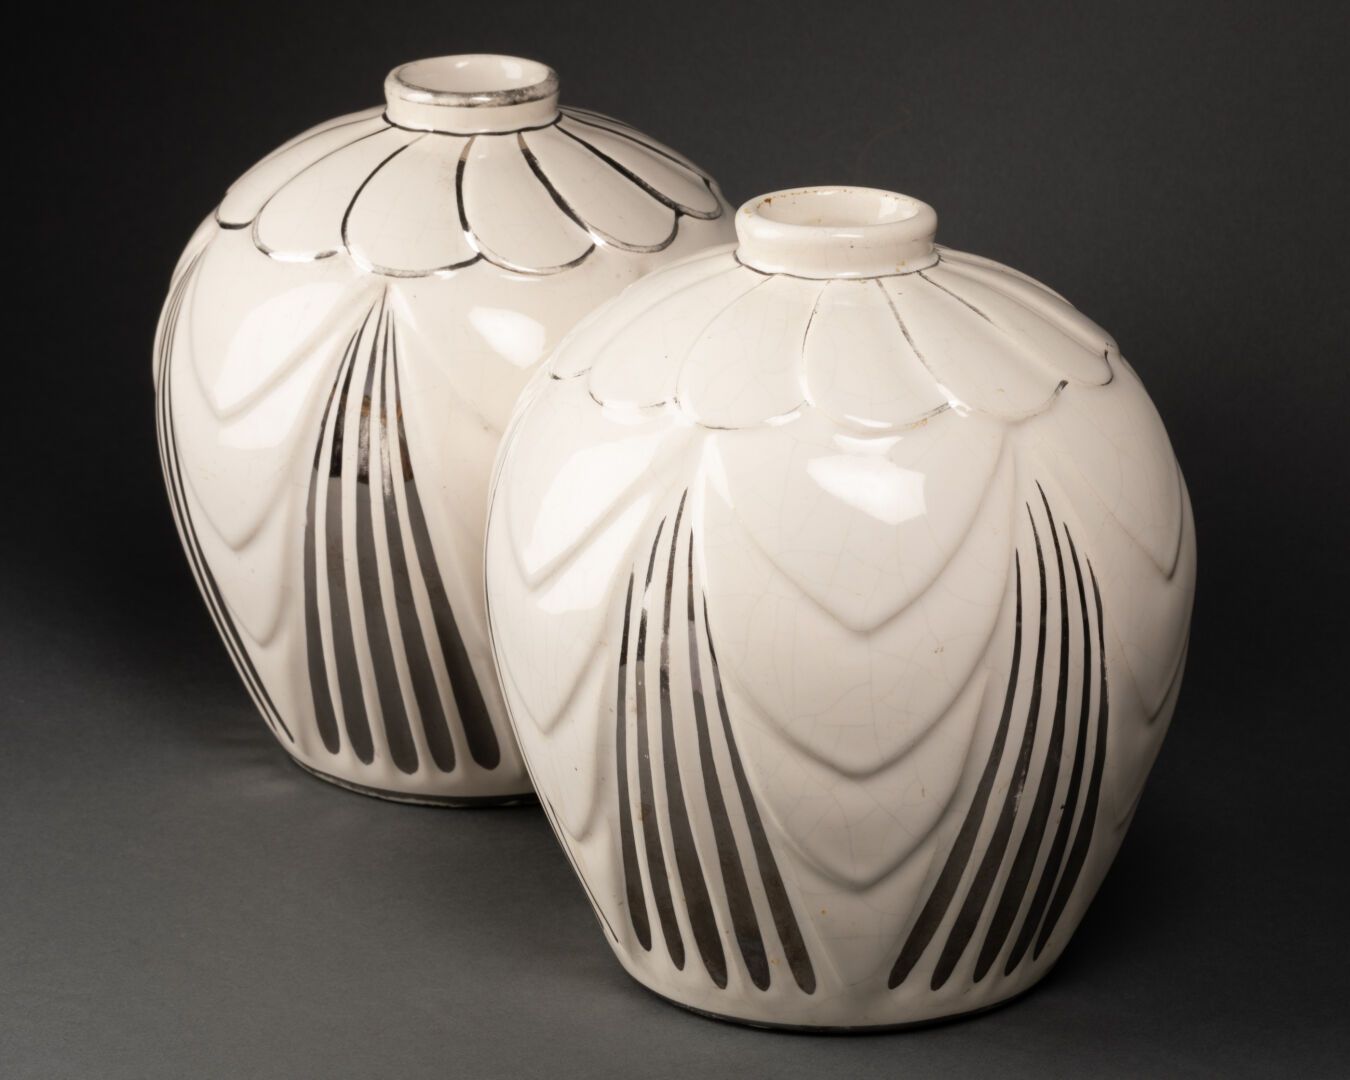 Travail vers 1940 一对狭长颈部的球状花瓶

白色背景上的浅浮雕银笛装饰

白色釉面的陶瓷

H.19厘米